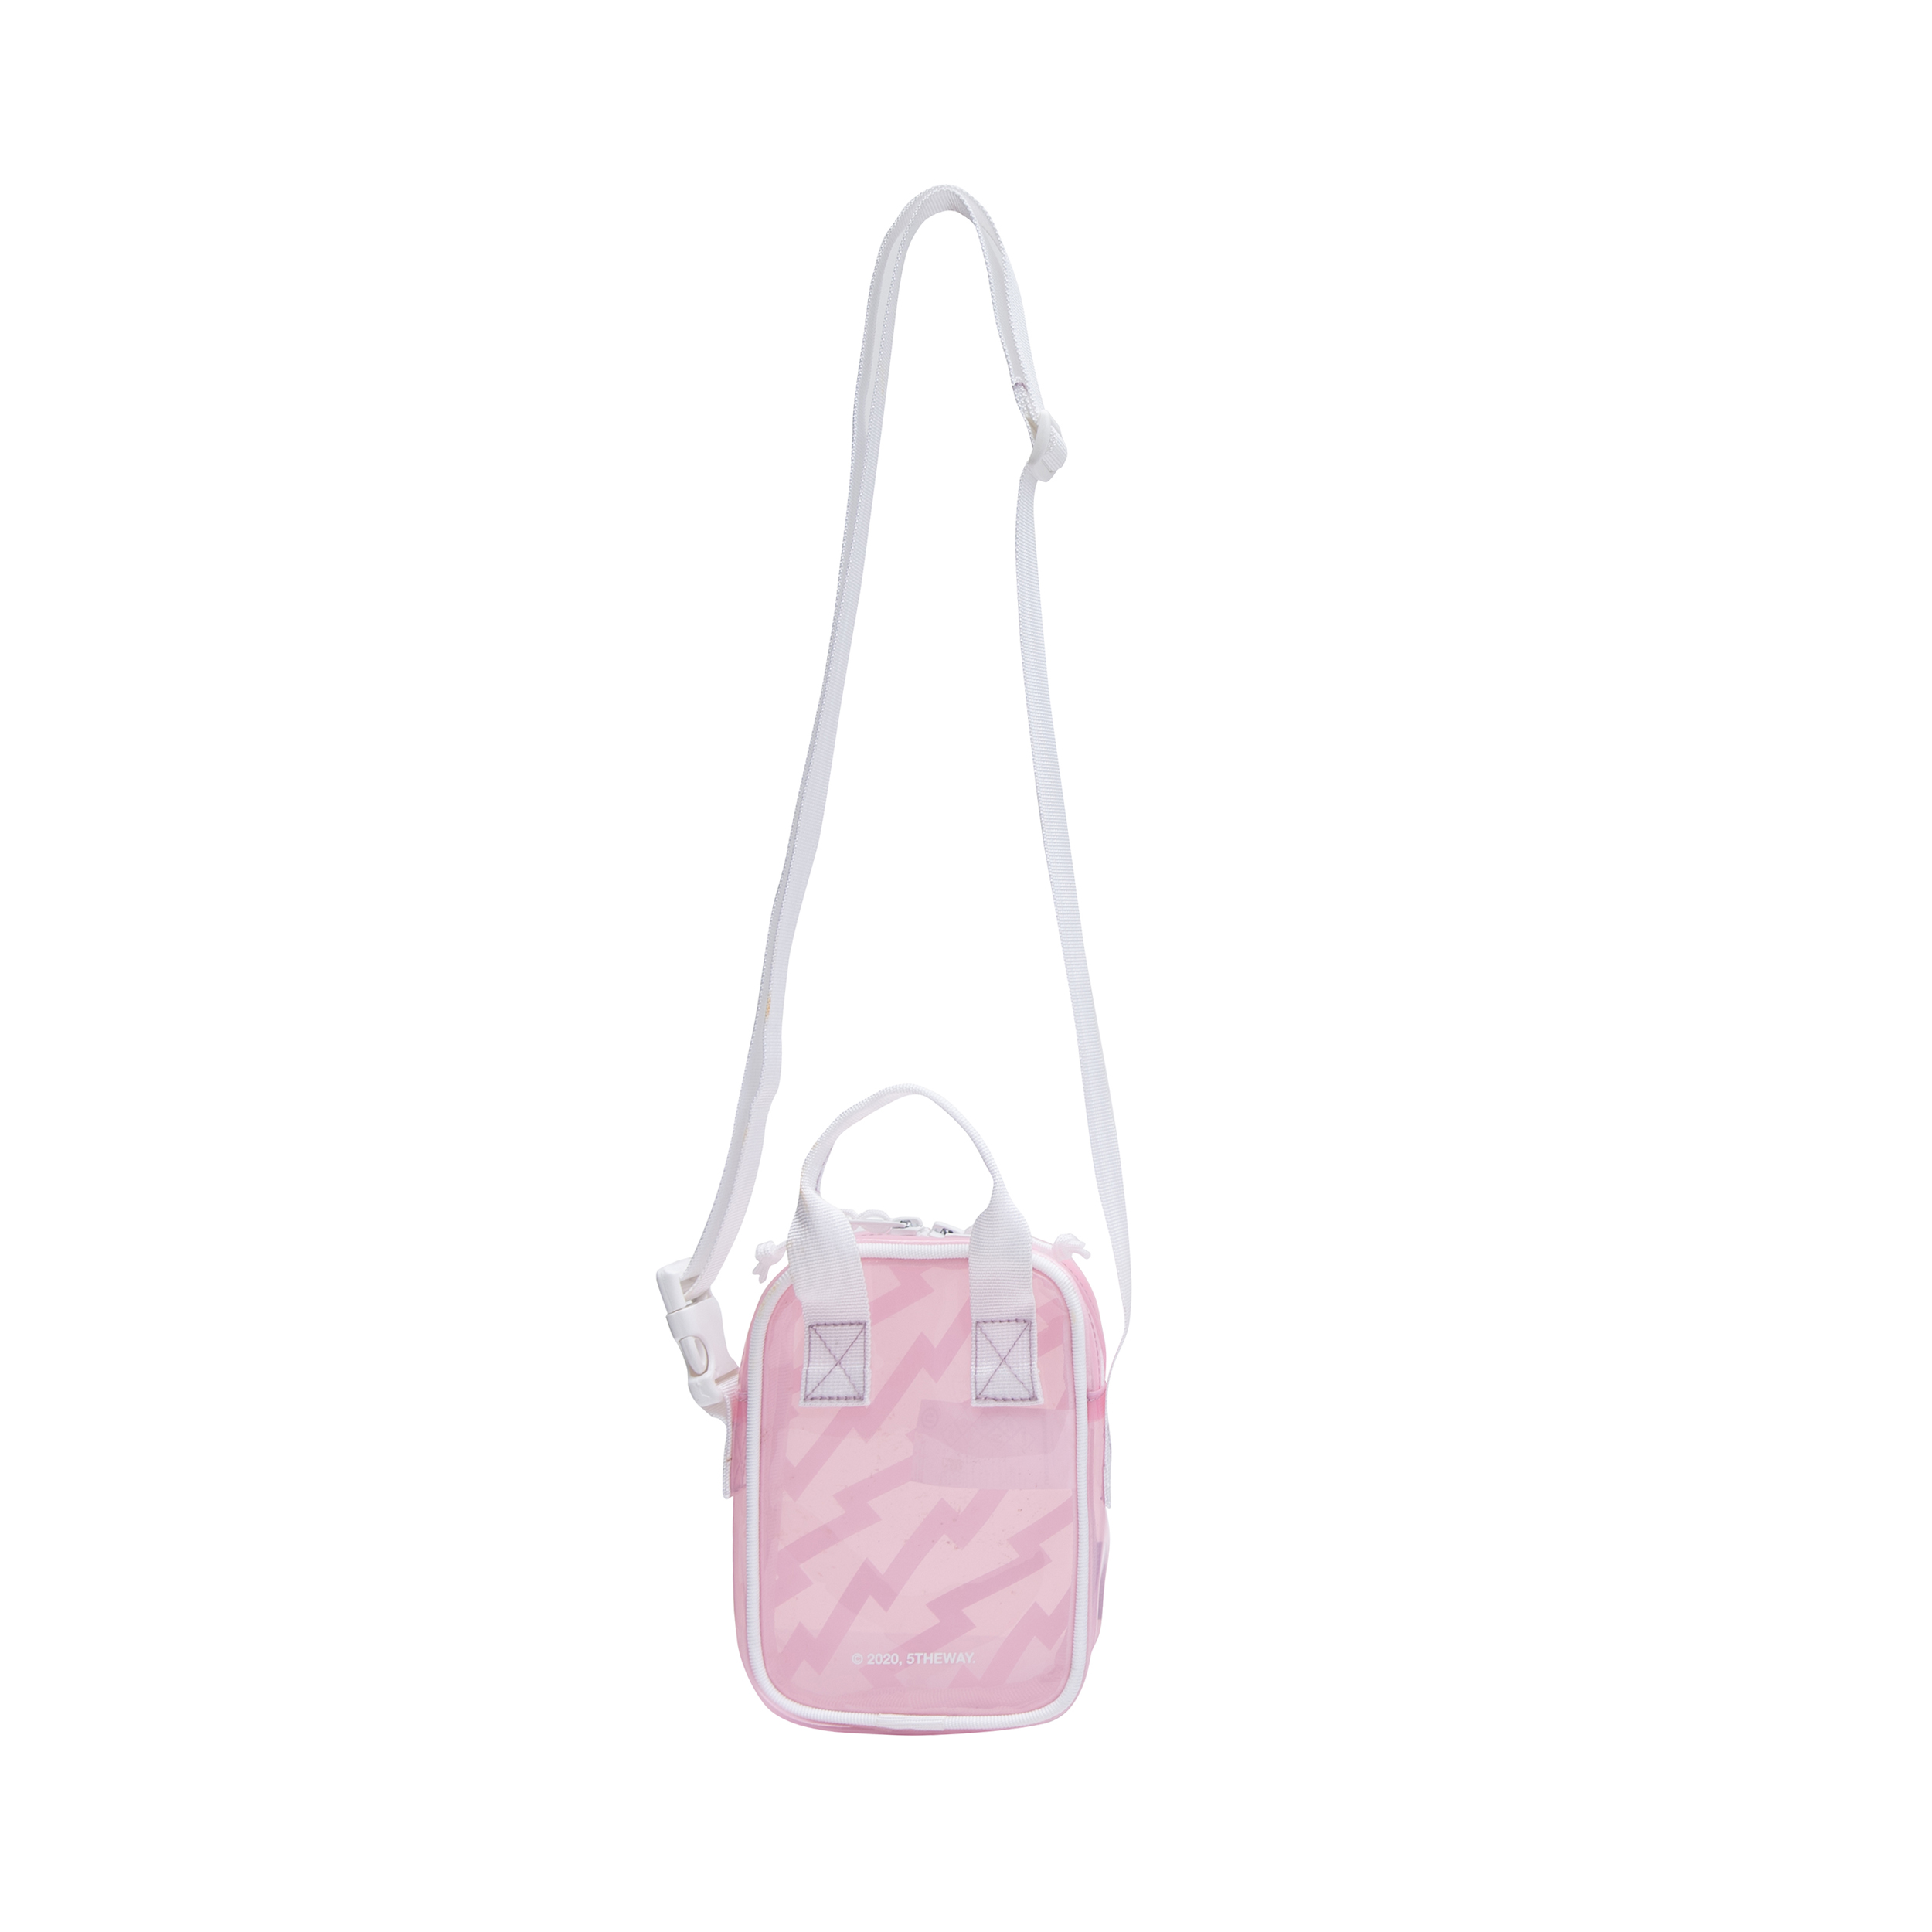 Túi Đeo Chéo 5THEWAY Nhựa Trong Suốt Hồng aka 5THEWAY /plastic/ VERTICAL SHOULDER BAG in PINK